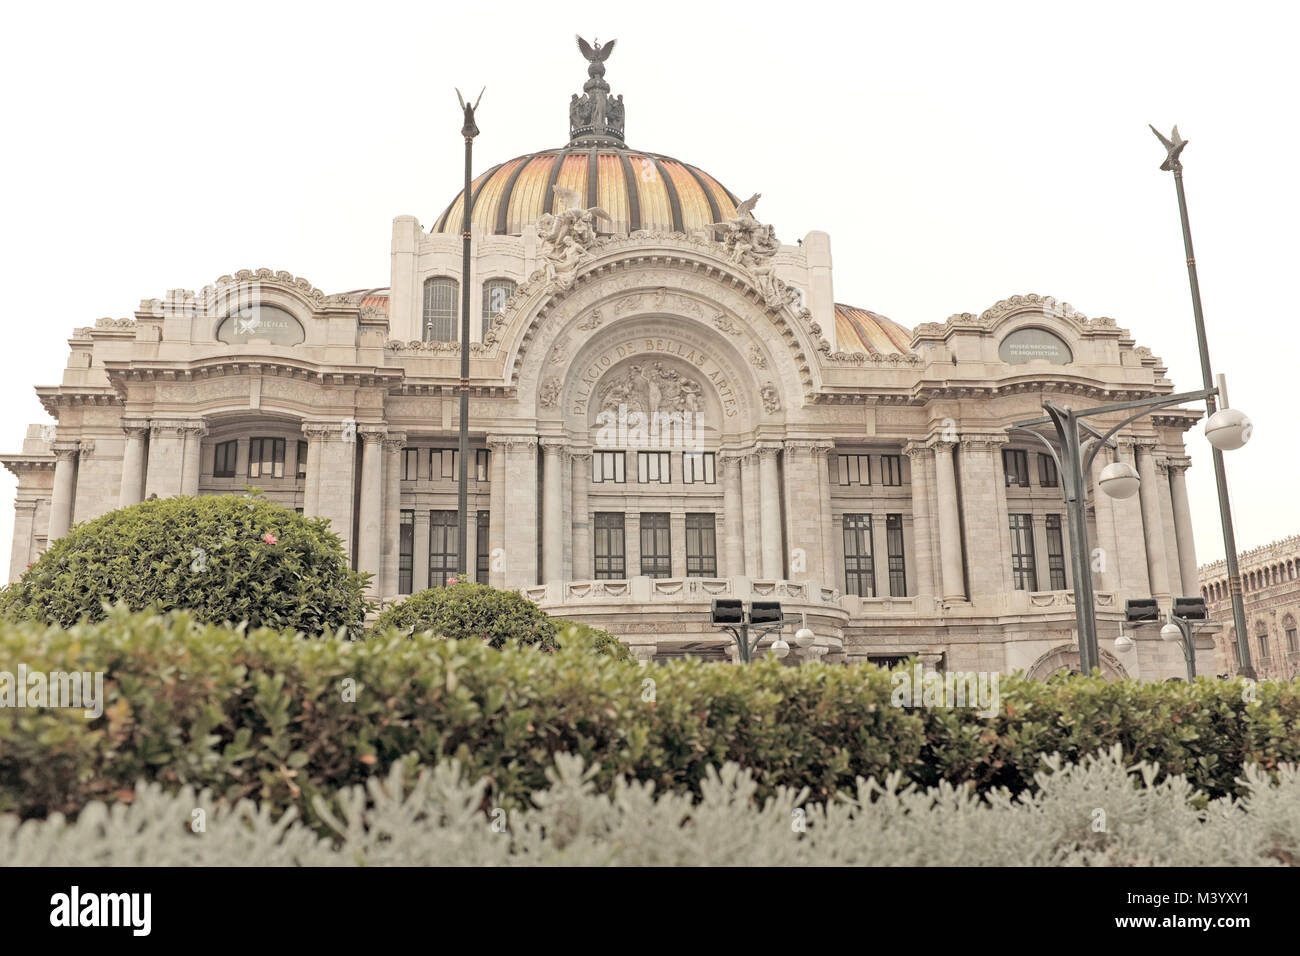 The ornate Palacio de Bellas Artes is a cultural and architectural landmark in Mexico City, Mexico. Stock Photo